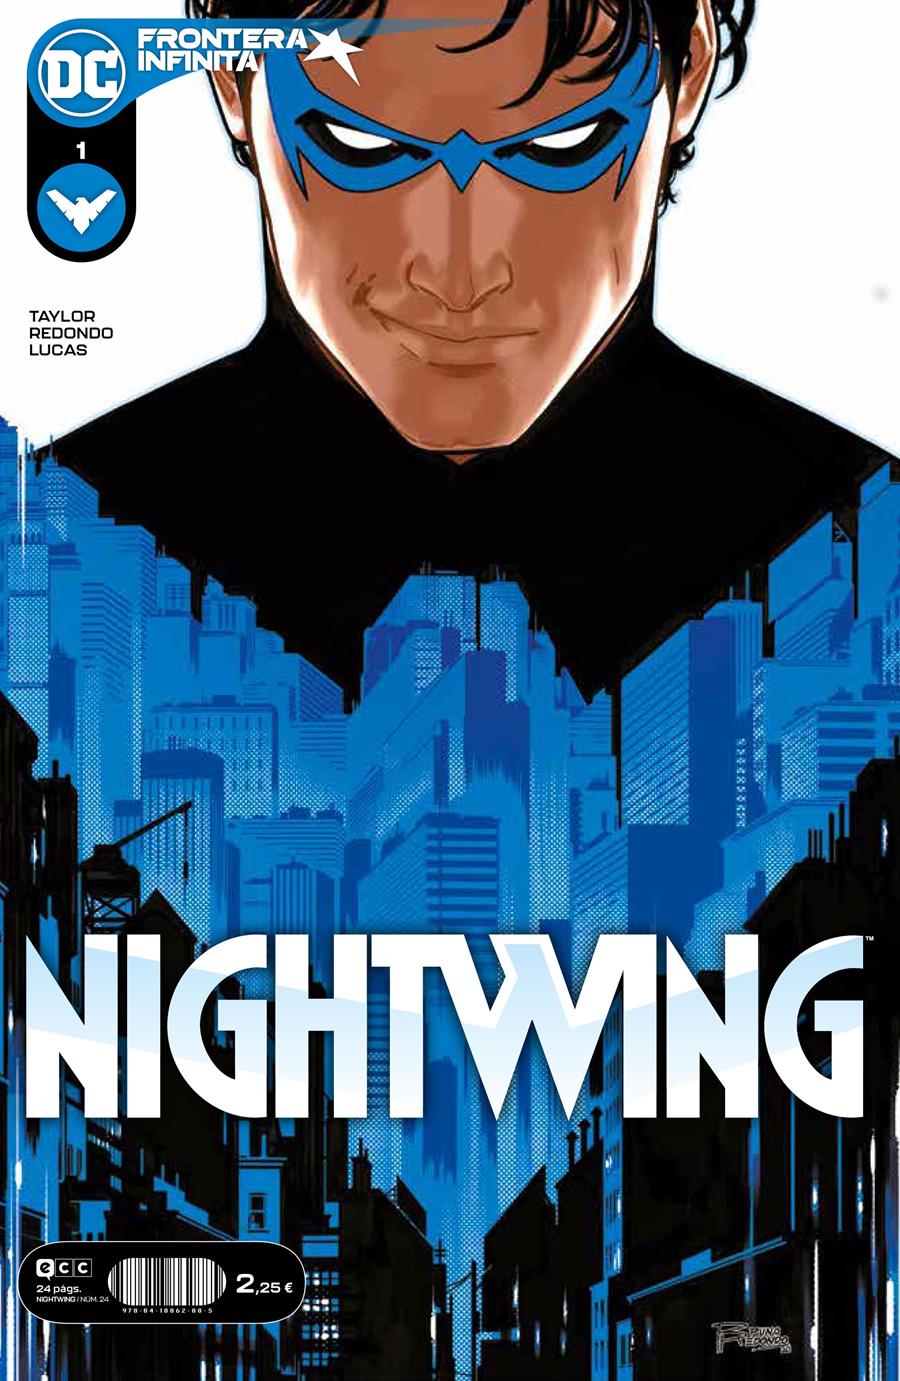 Nightwing núm. 01 | N1021-ECC25 | Bruno Redondo / Tom Taylor | Terra de Còmic - Tu tienda de cómics online especializada en cómics, manga y merchandising